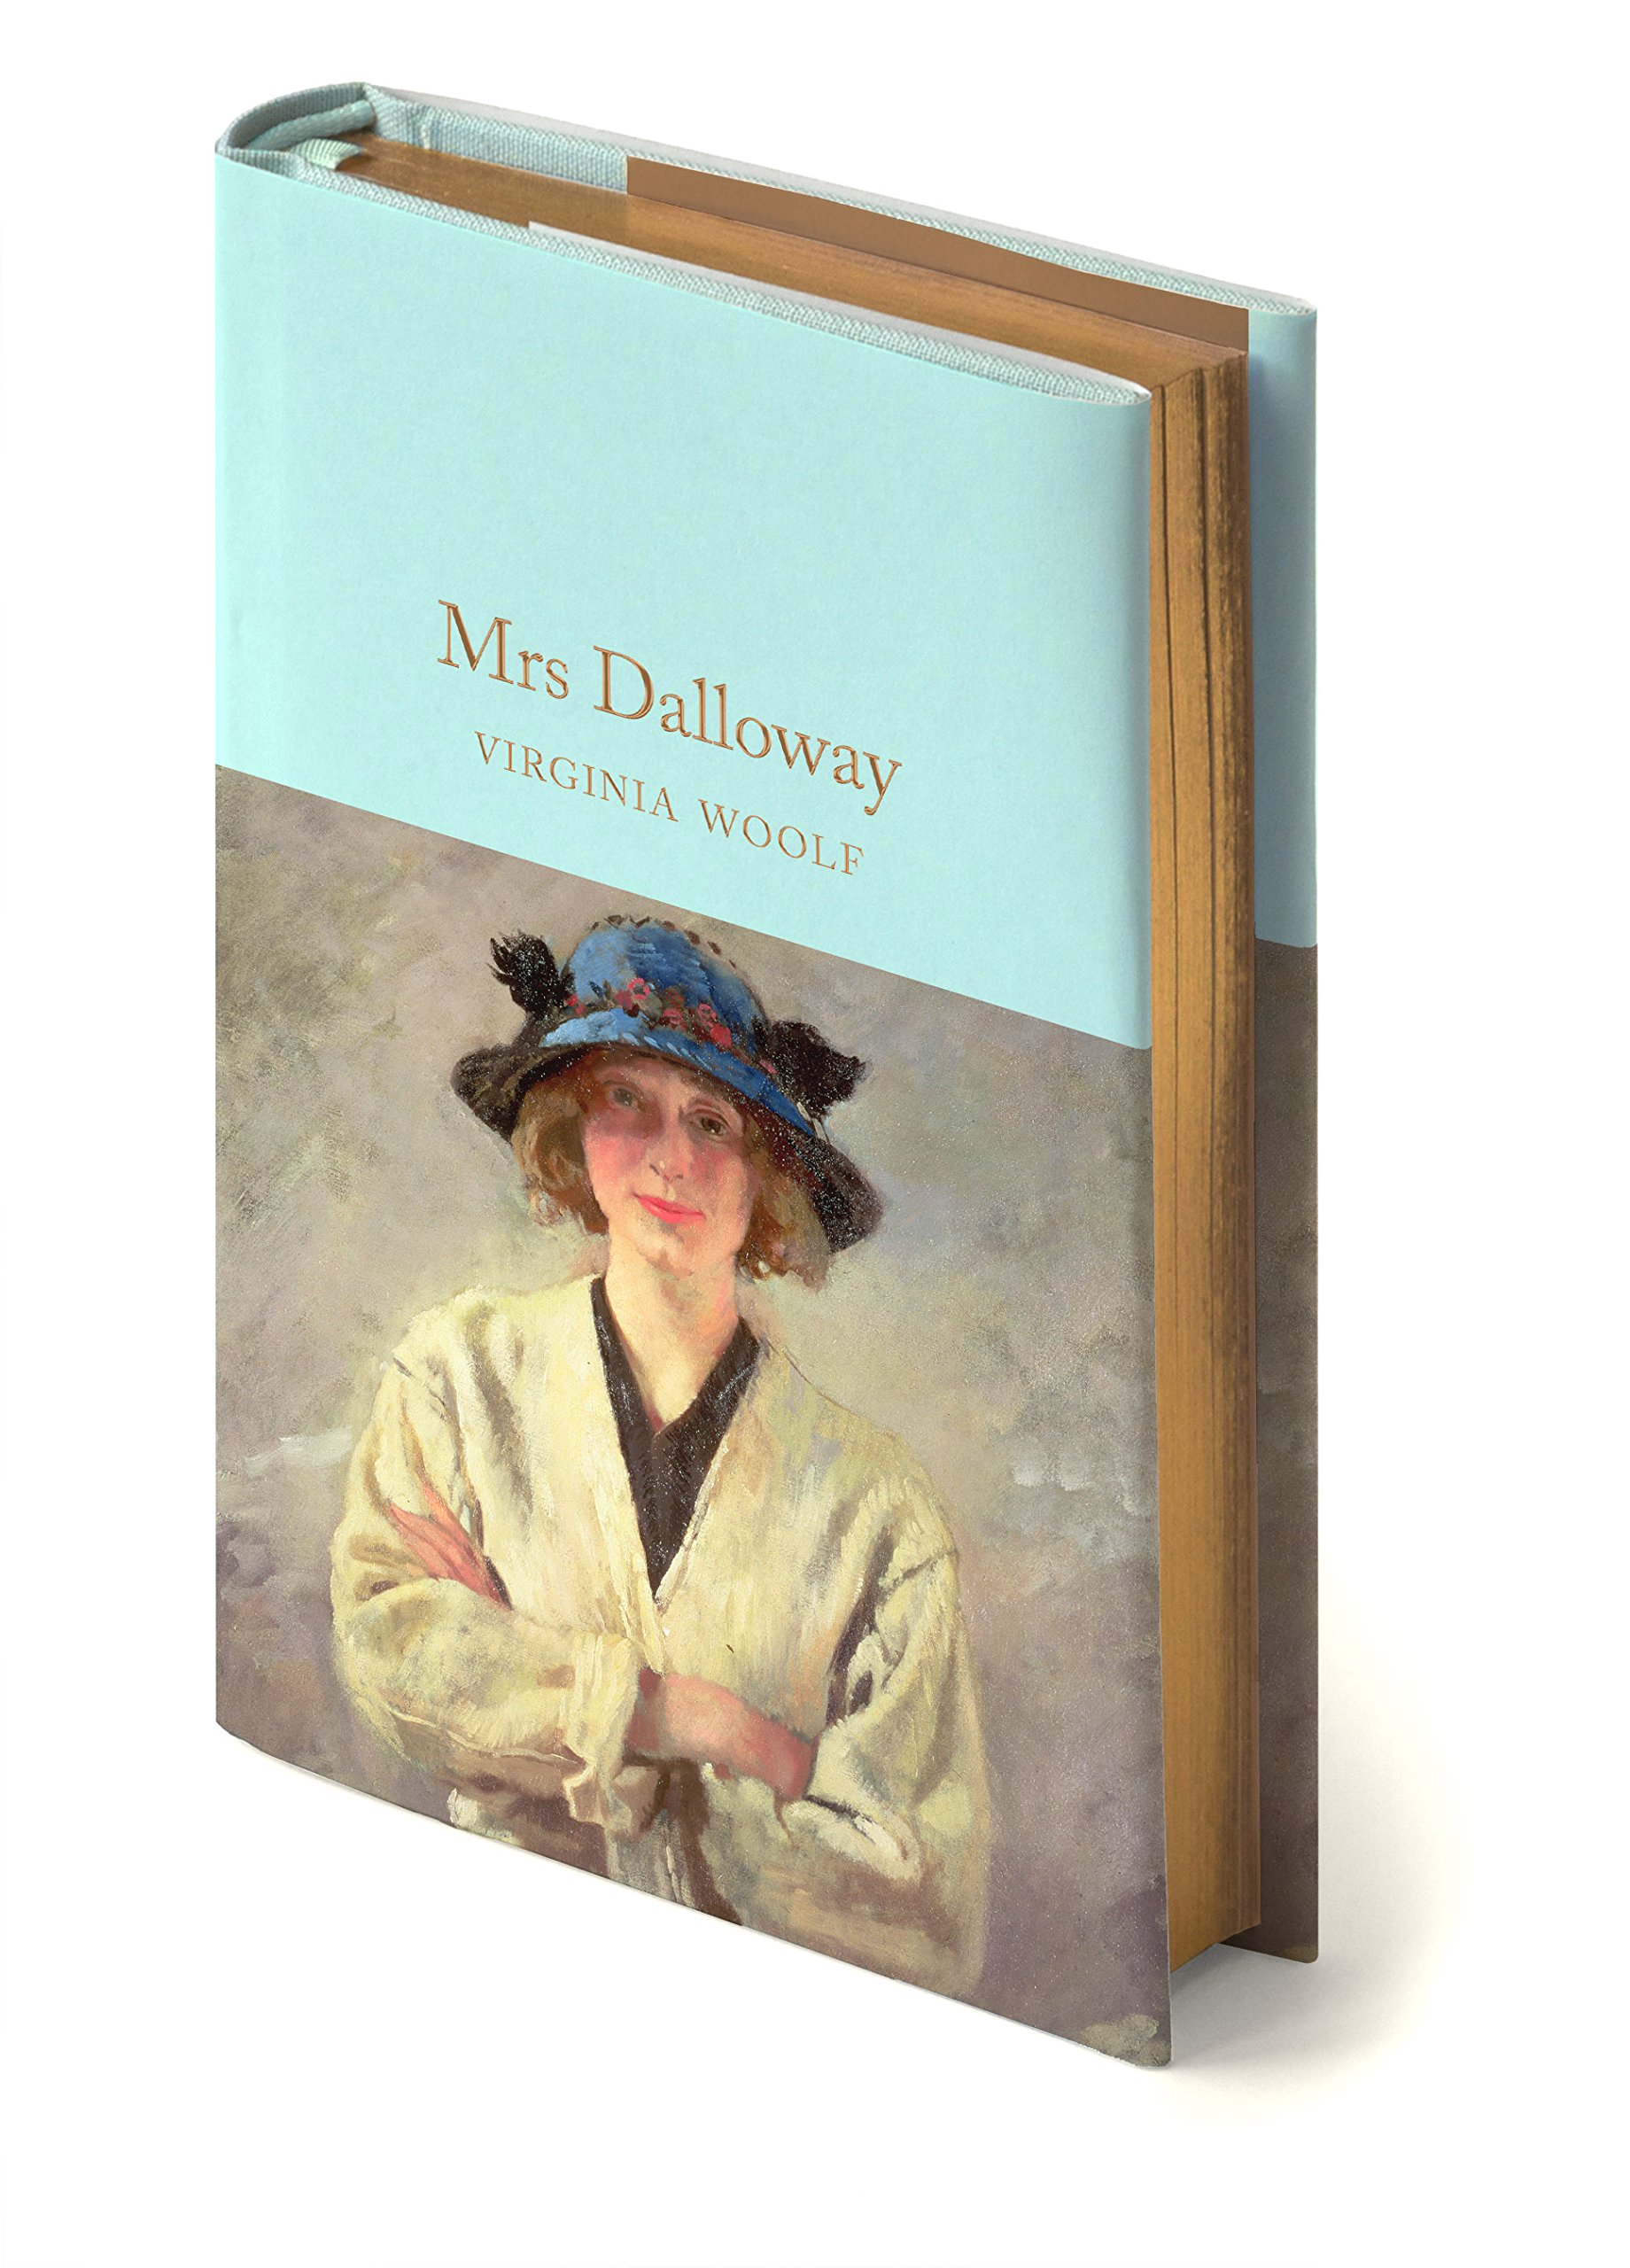 mrs dalloway novel